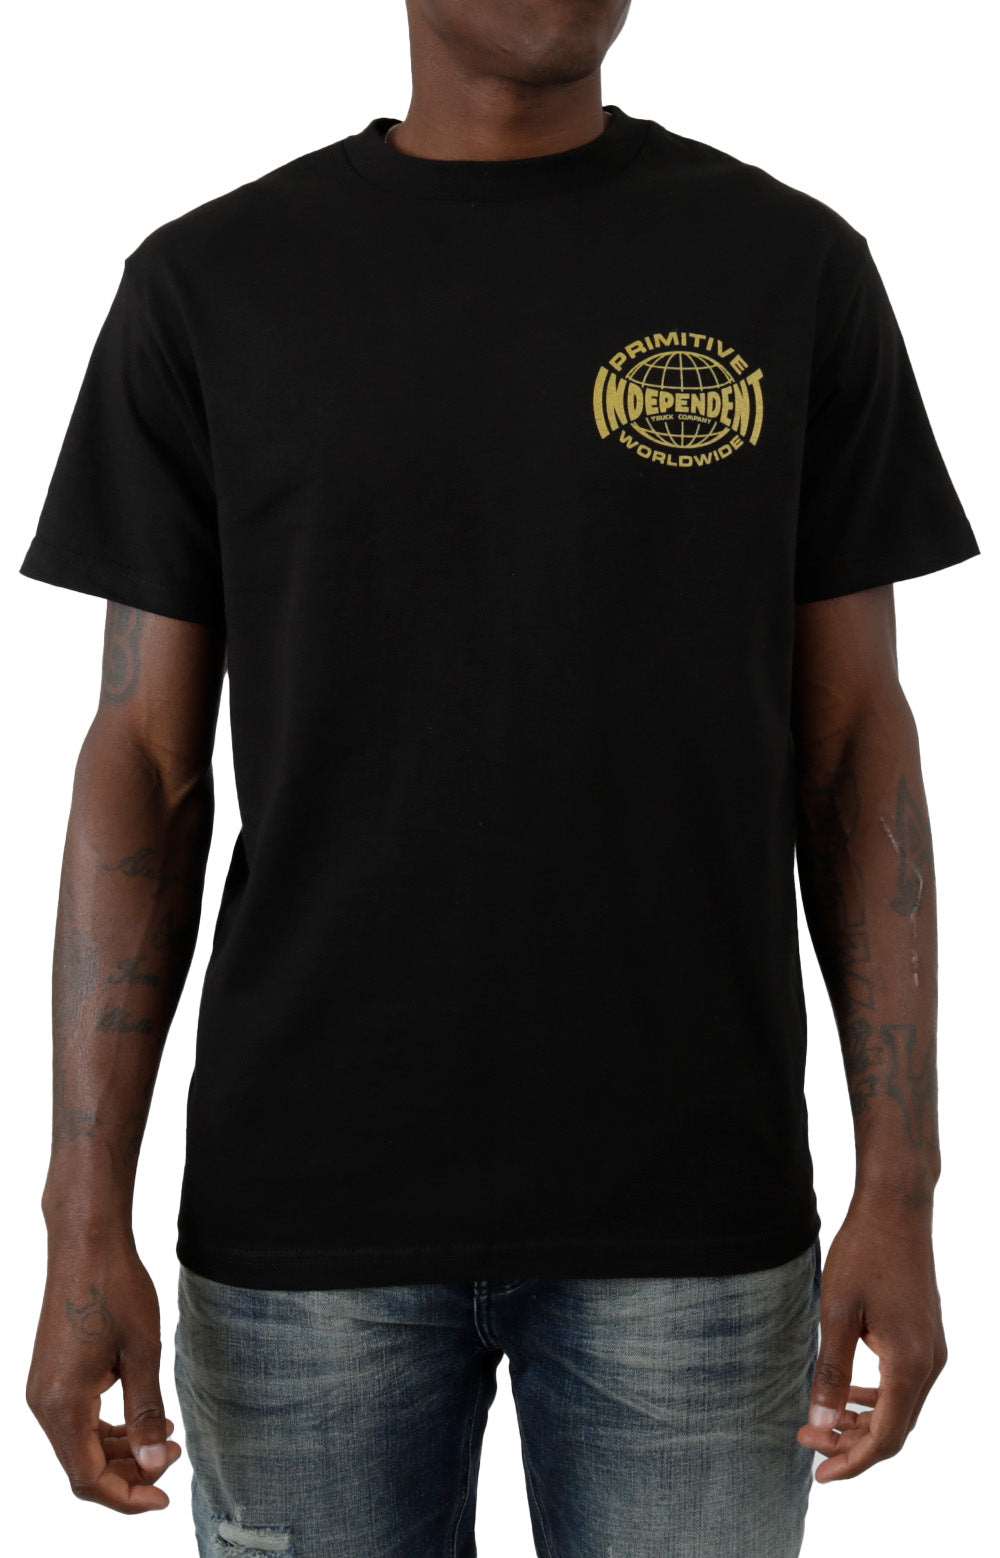 x Independent Global T-Shirt - Black